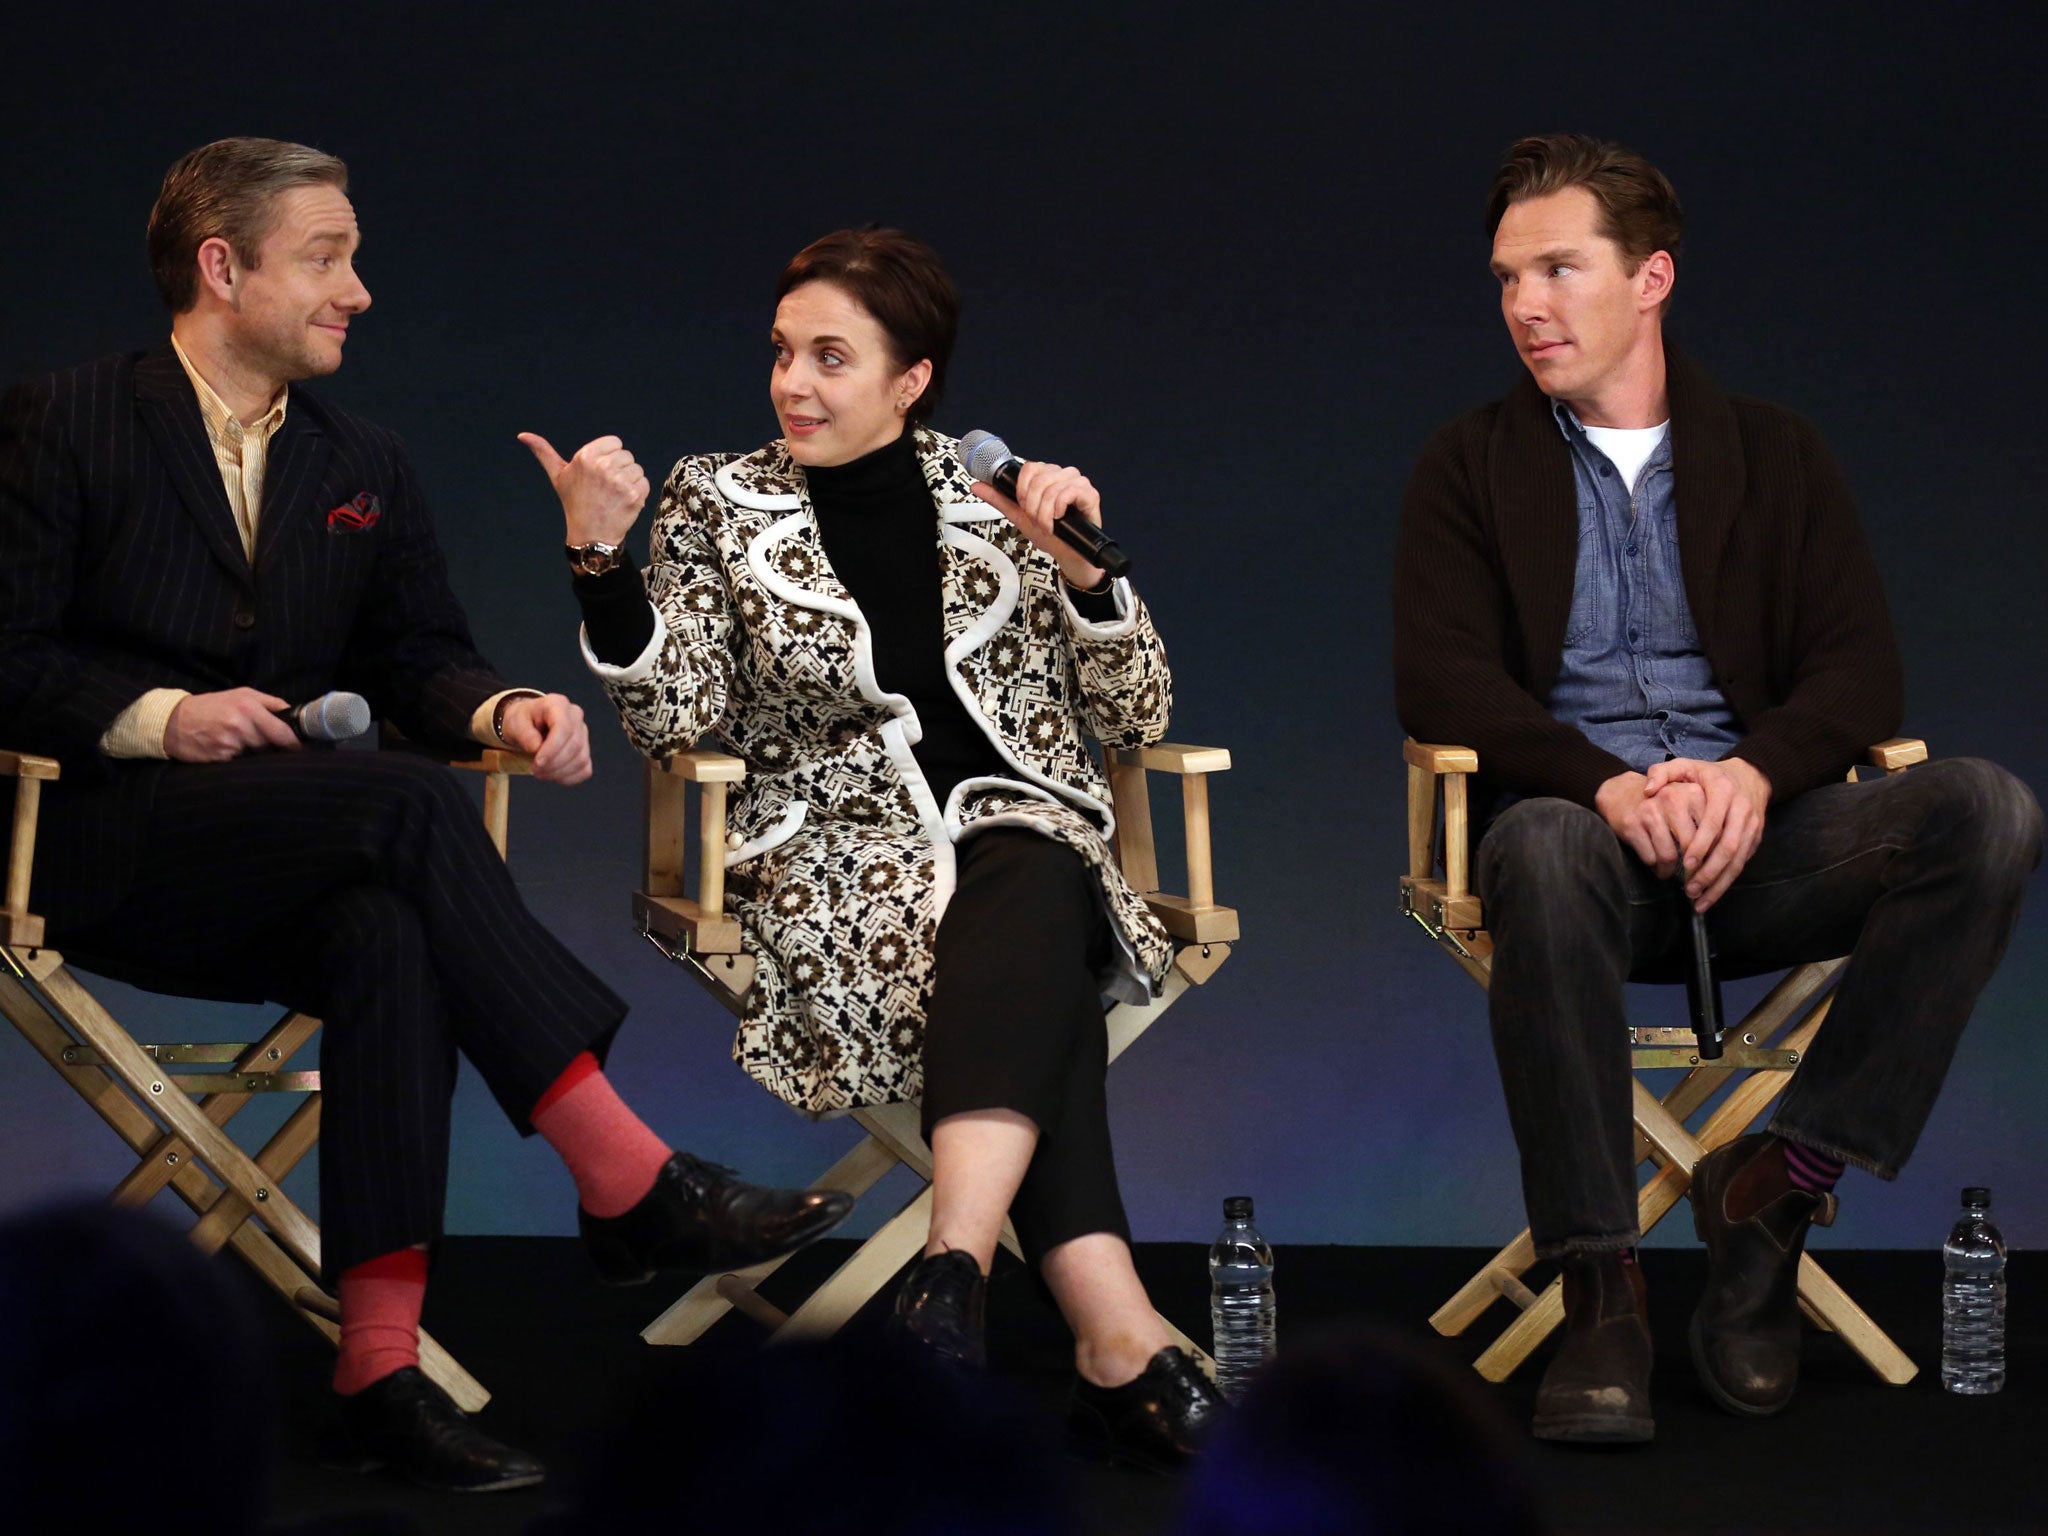 Martin Freeman, Amanda Abbington and Benedict Cumberbatch at the Meet the Filmmakers: Sherlock event at the Apple Store on 4 February